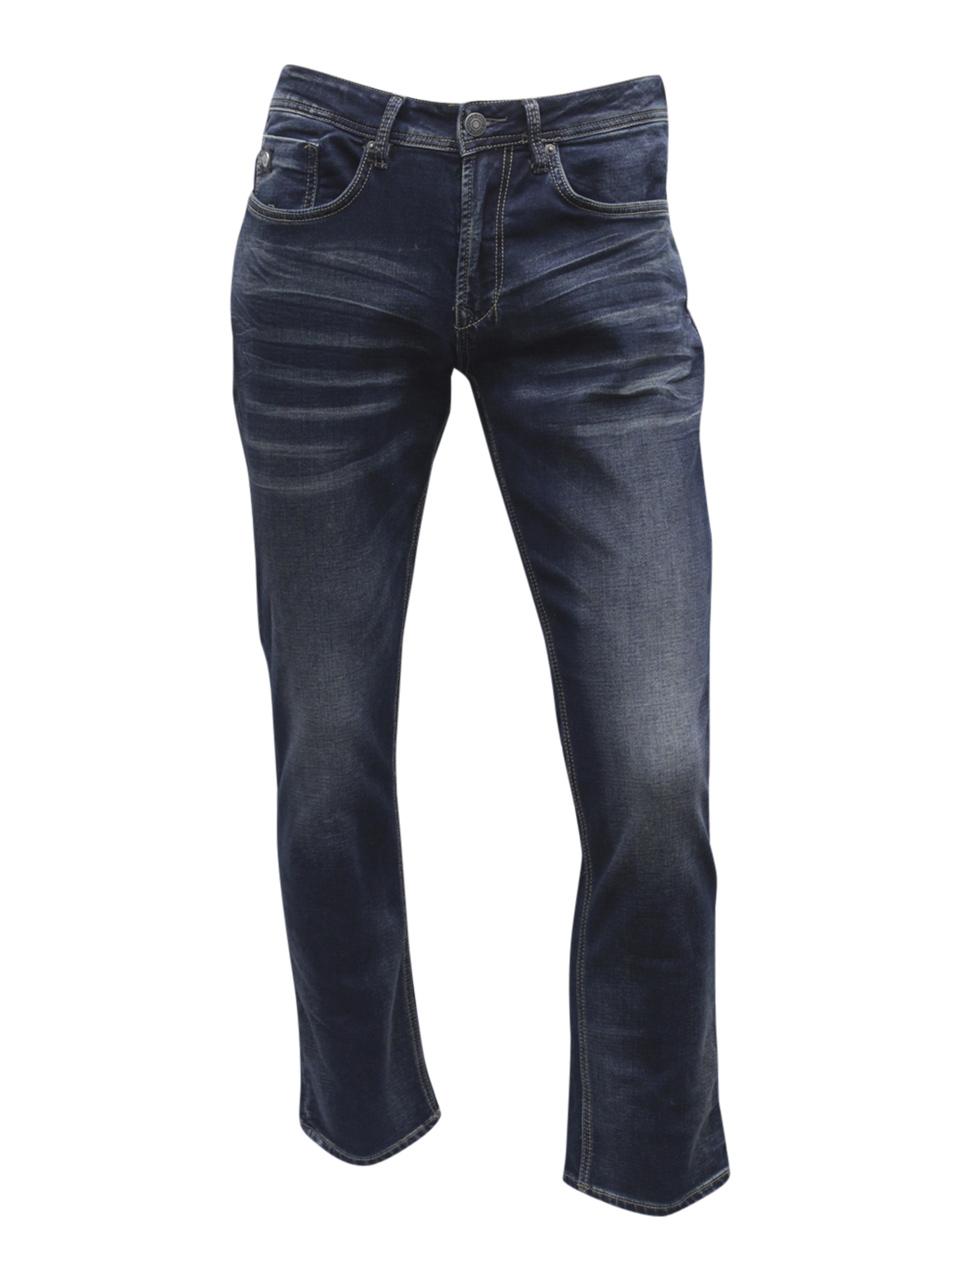 david bitton jeans